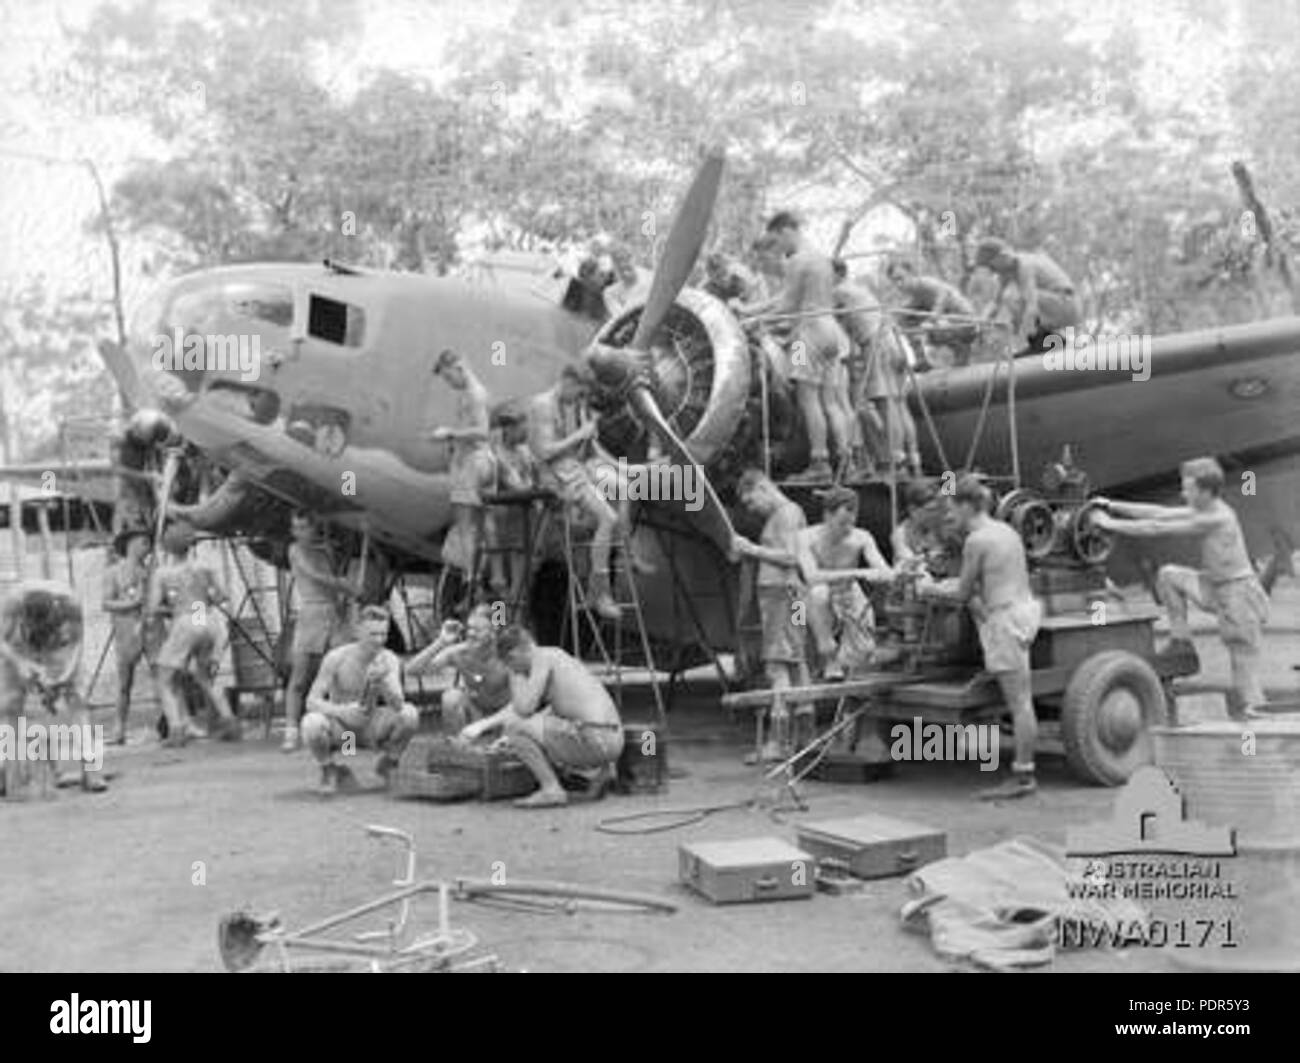 68 Inspection on 2 Squadron RAAF Hudson Mar 1943 AWM NWA0171 Stock Photo